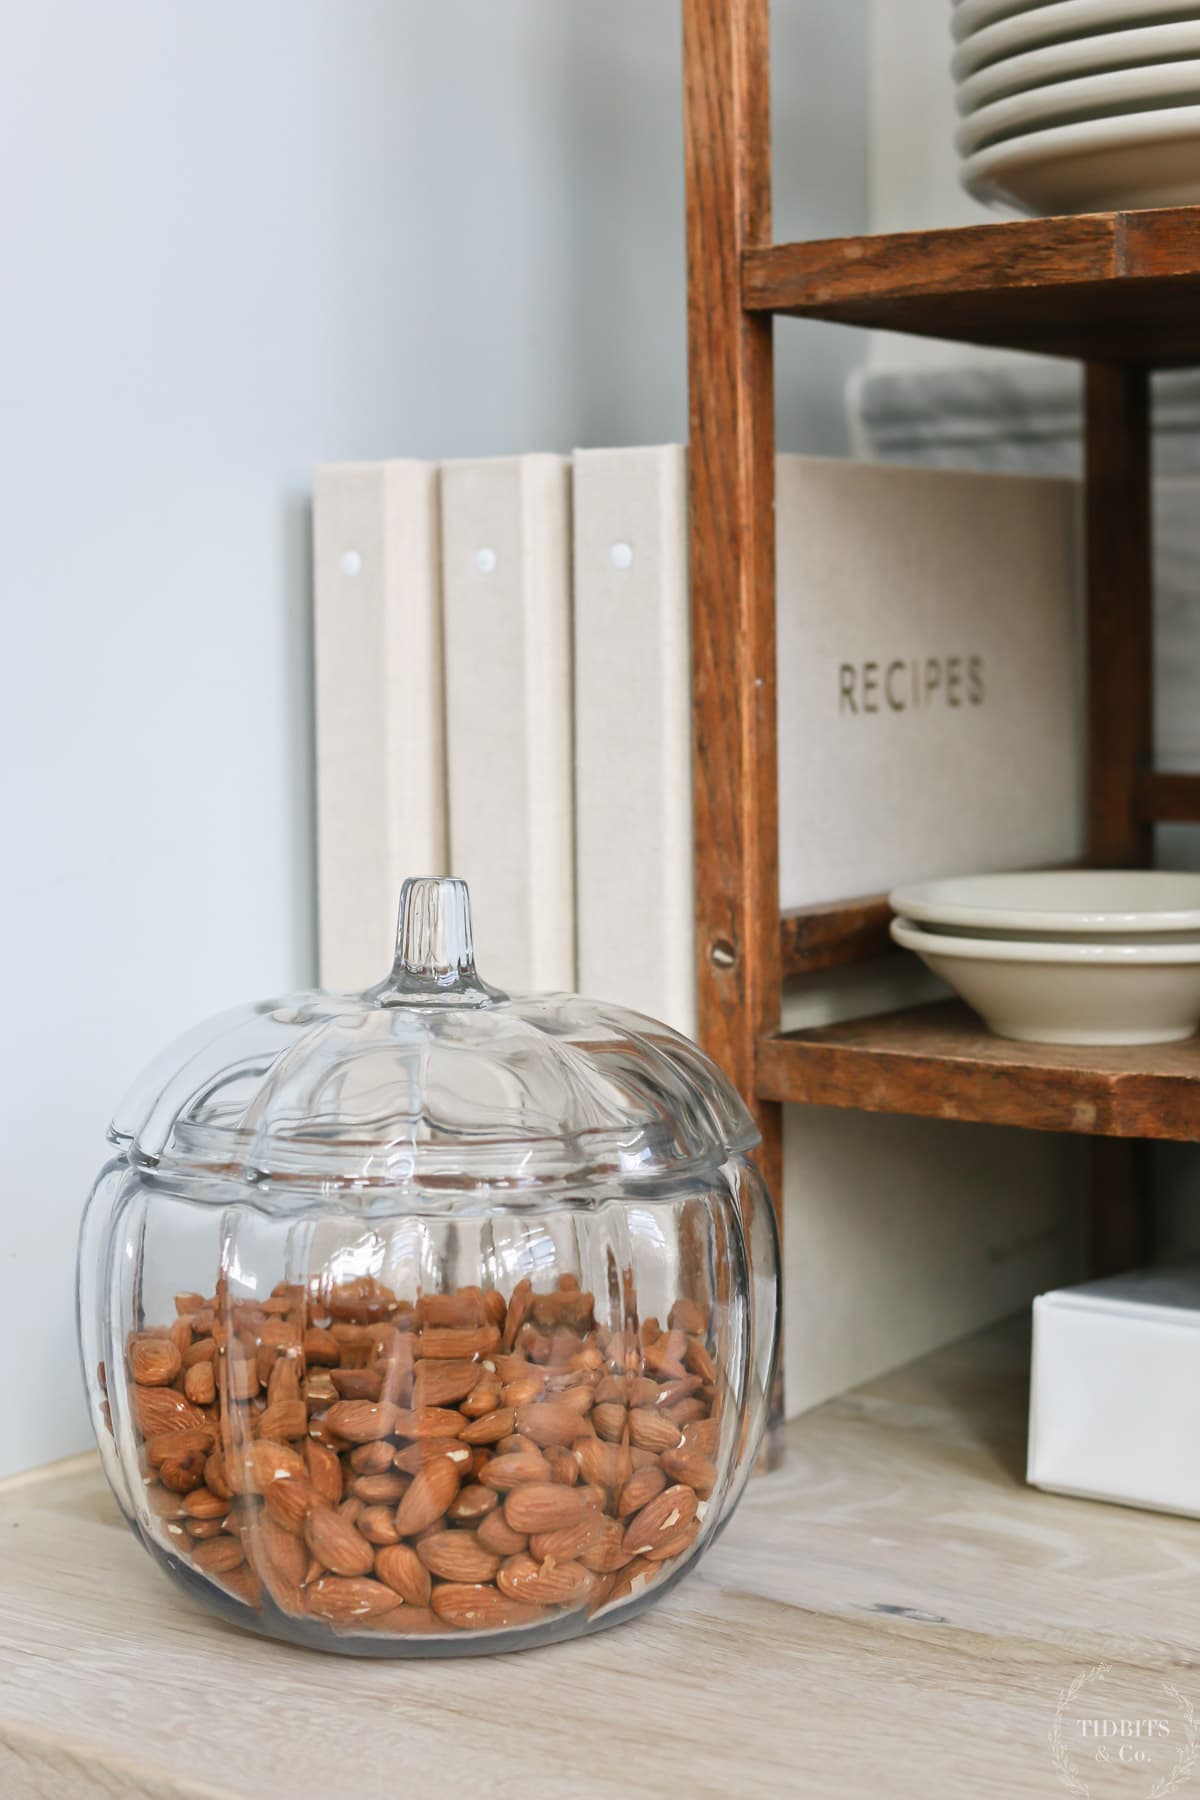 Close up of a glass pumpkin-shaped jar with almonds inside